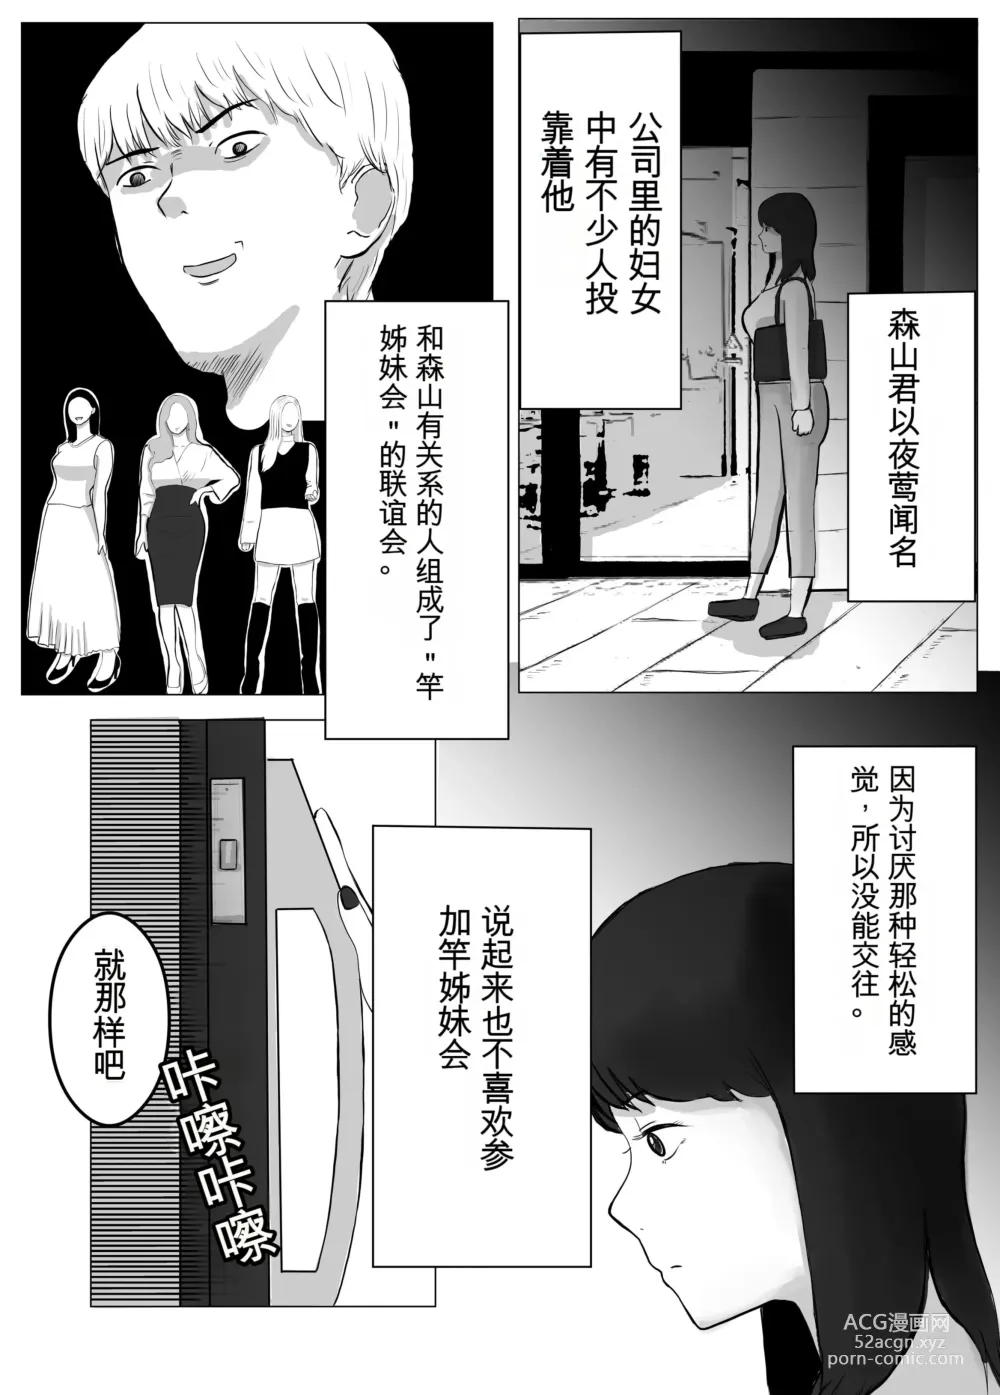 Page 14 of doujinshi 请让我睡一觉再考虑一下